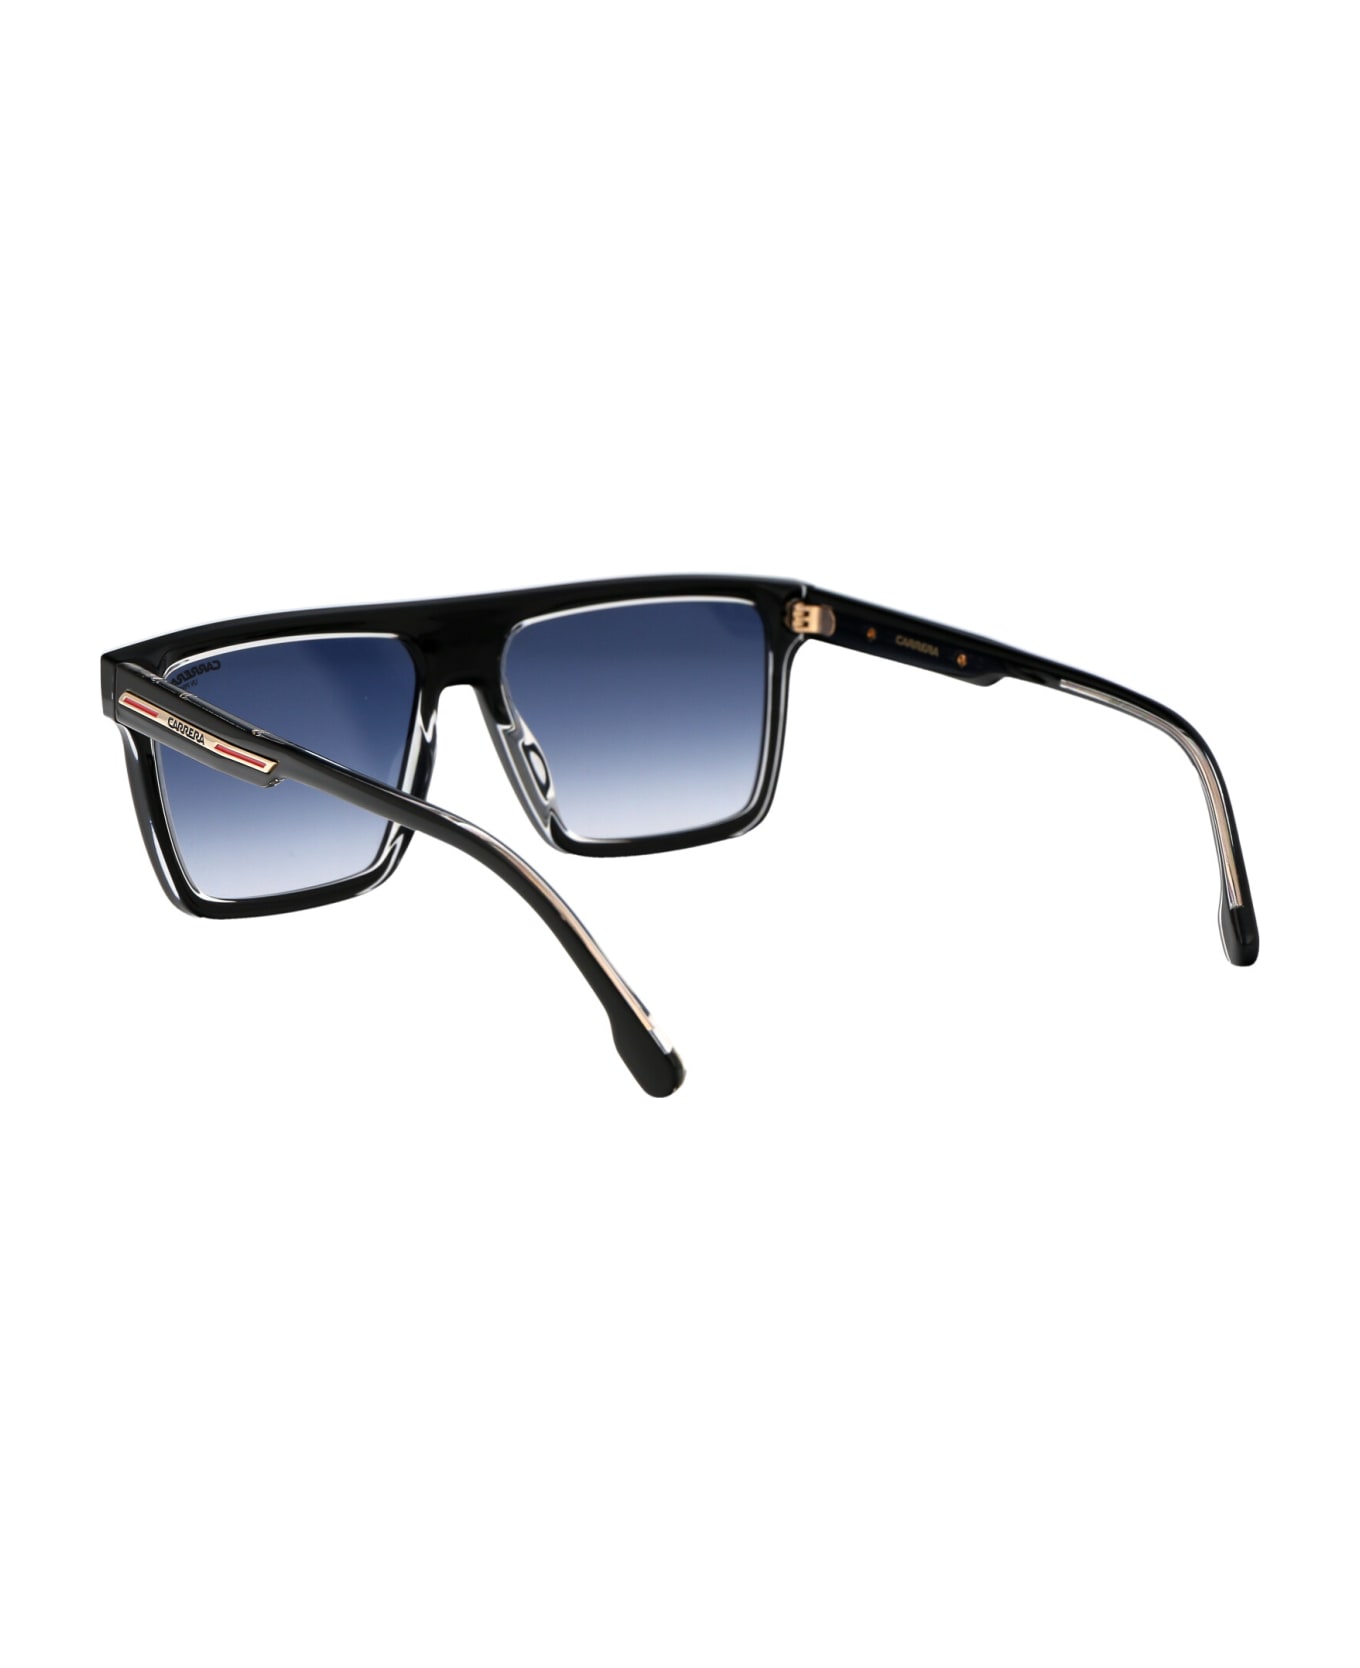 Carrera Victory C 03/s Sunglasses - 7C508 BLACK CRY サングラス